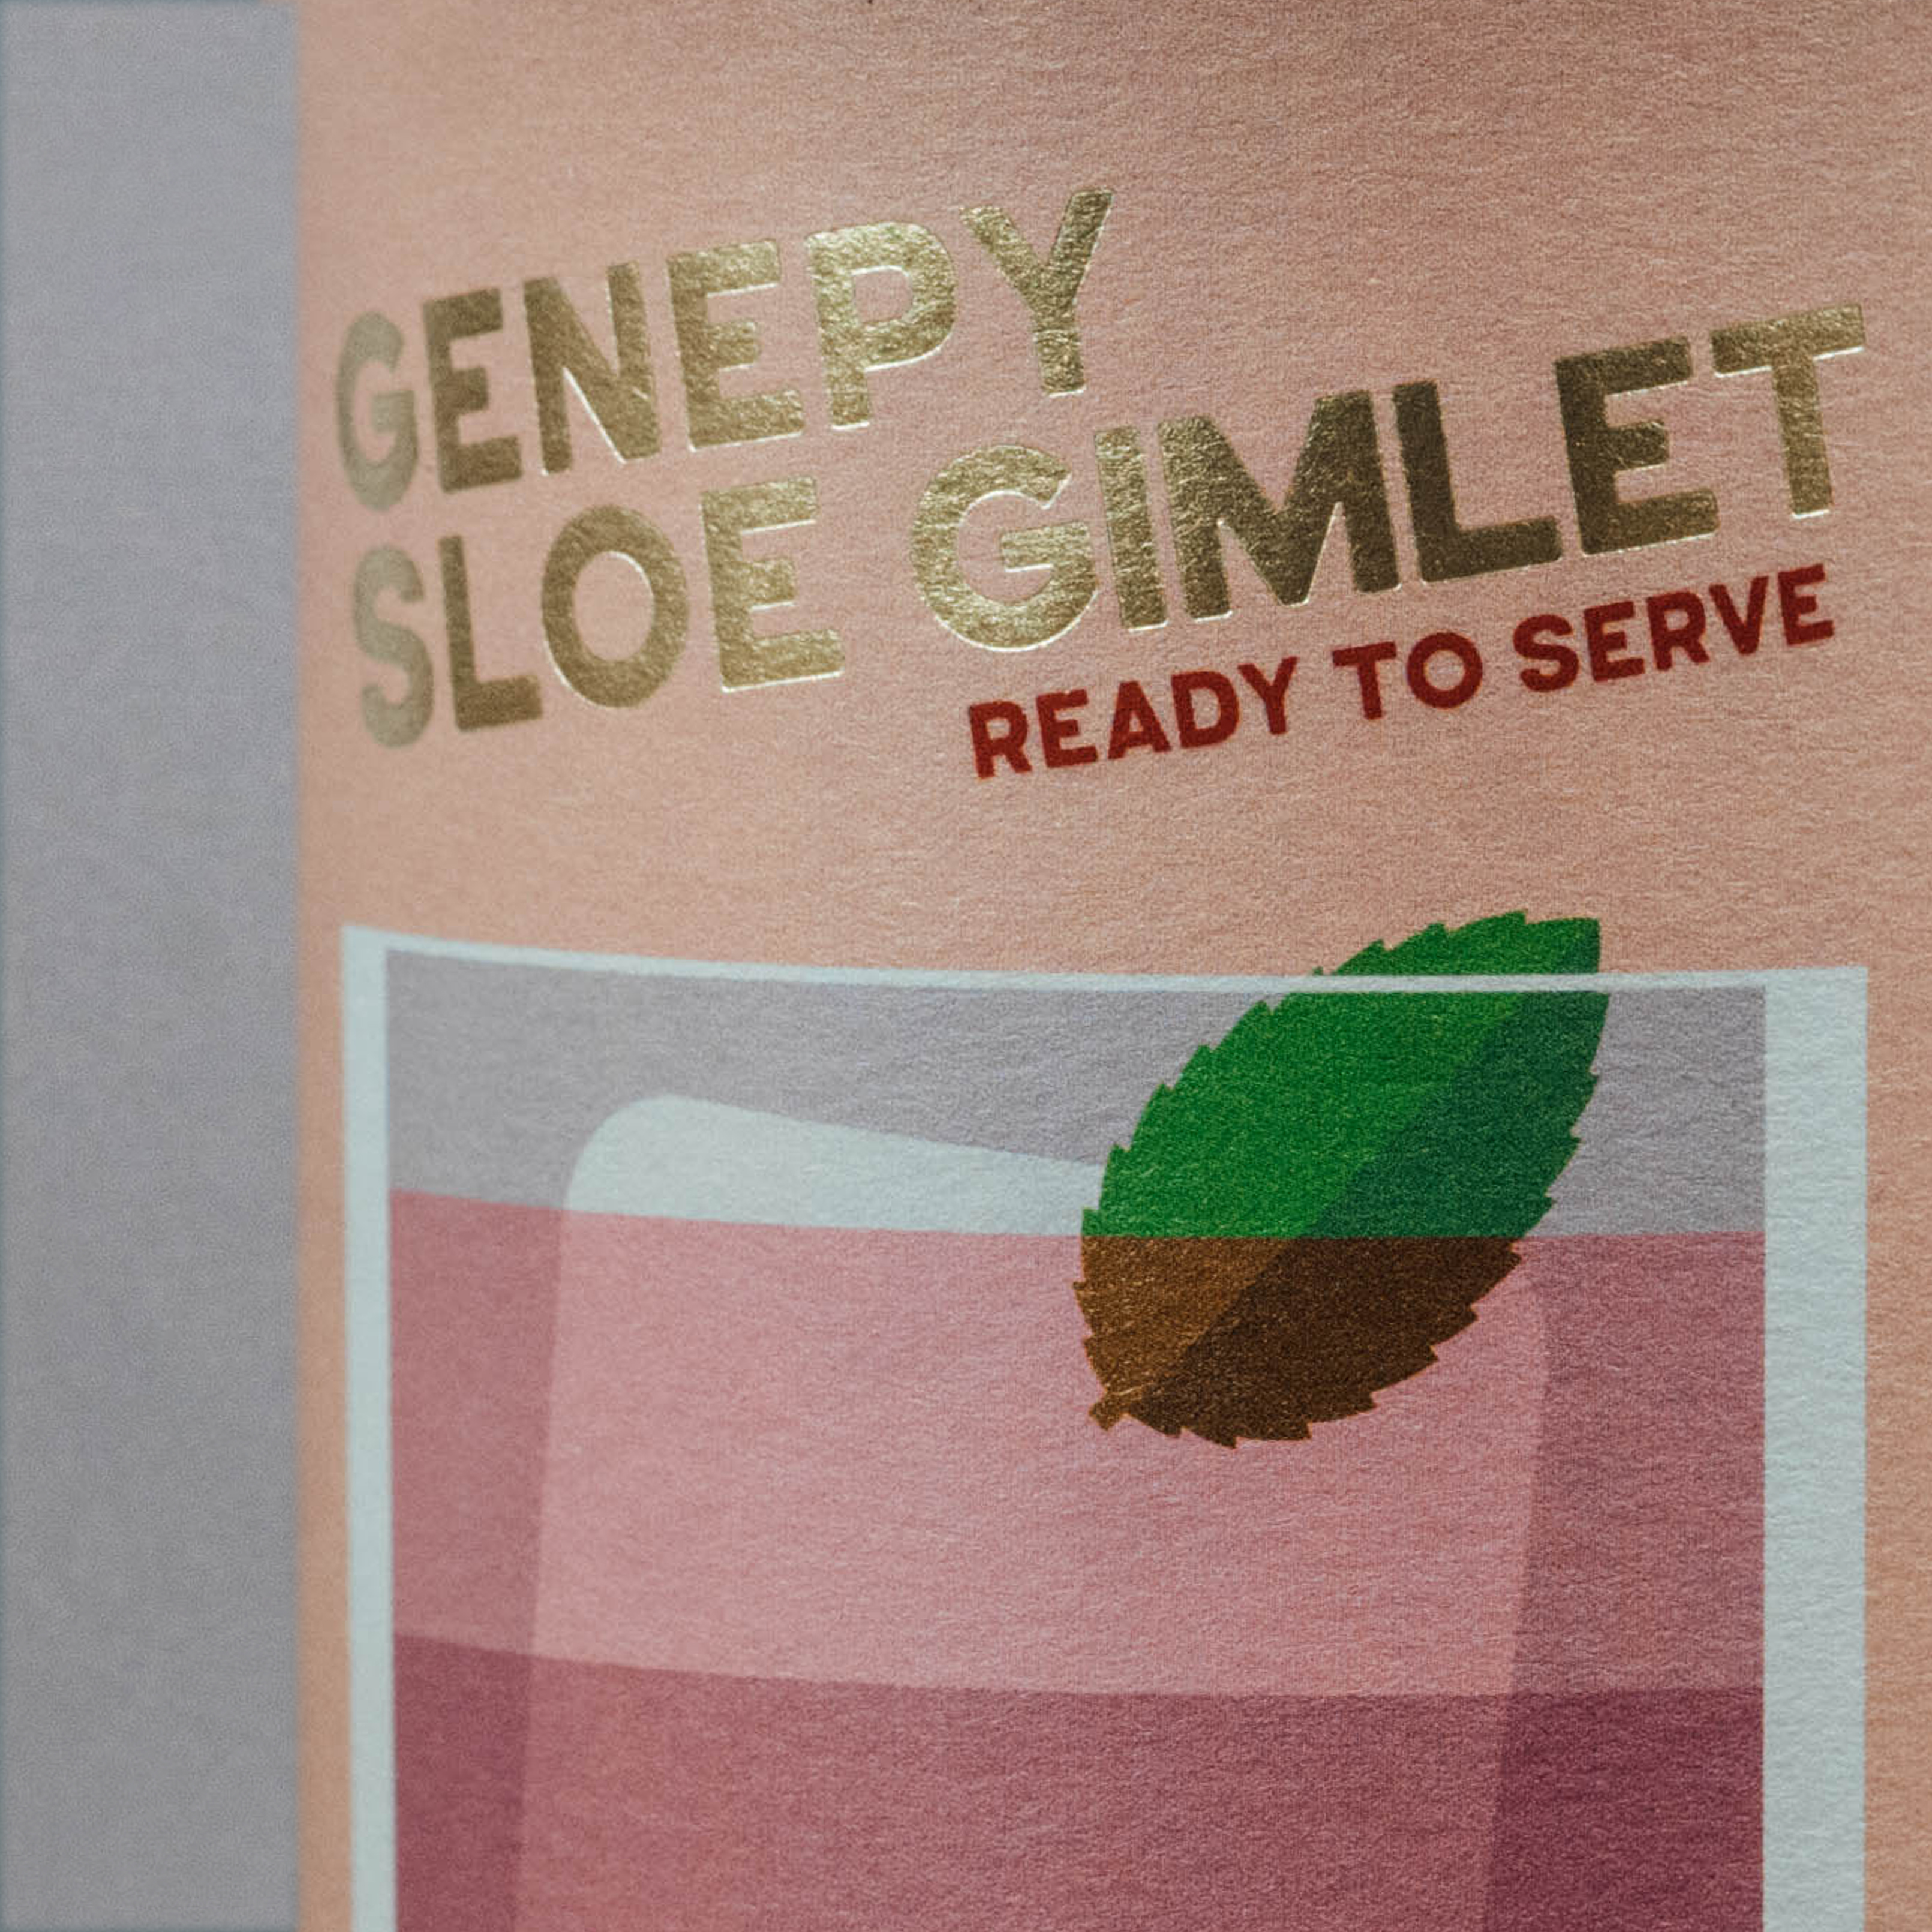 Genepy Sloe Gimlet